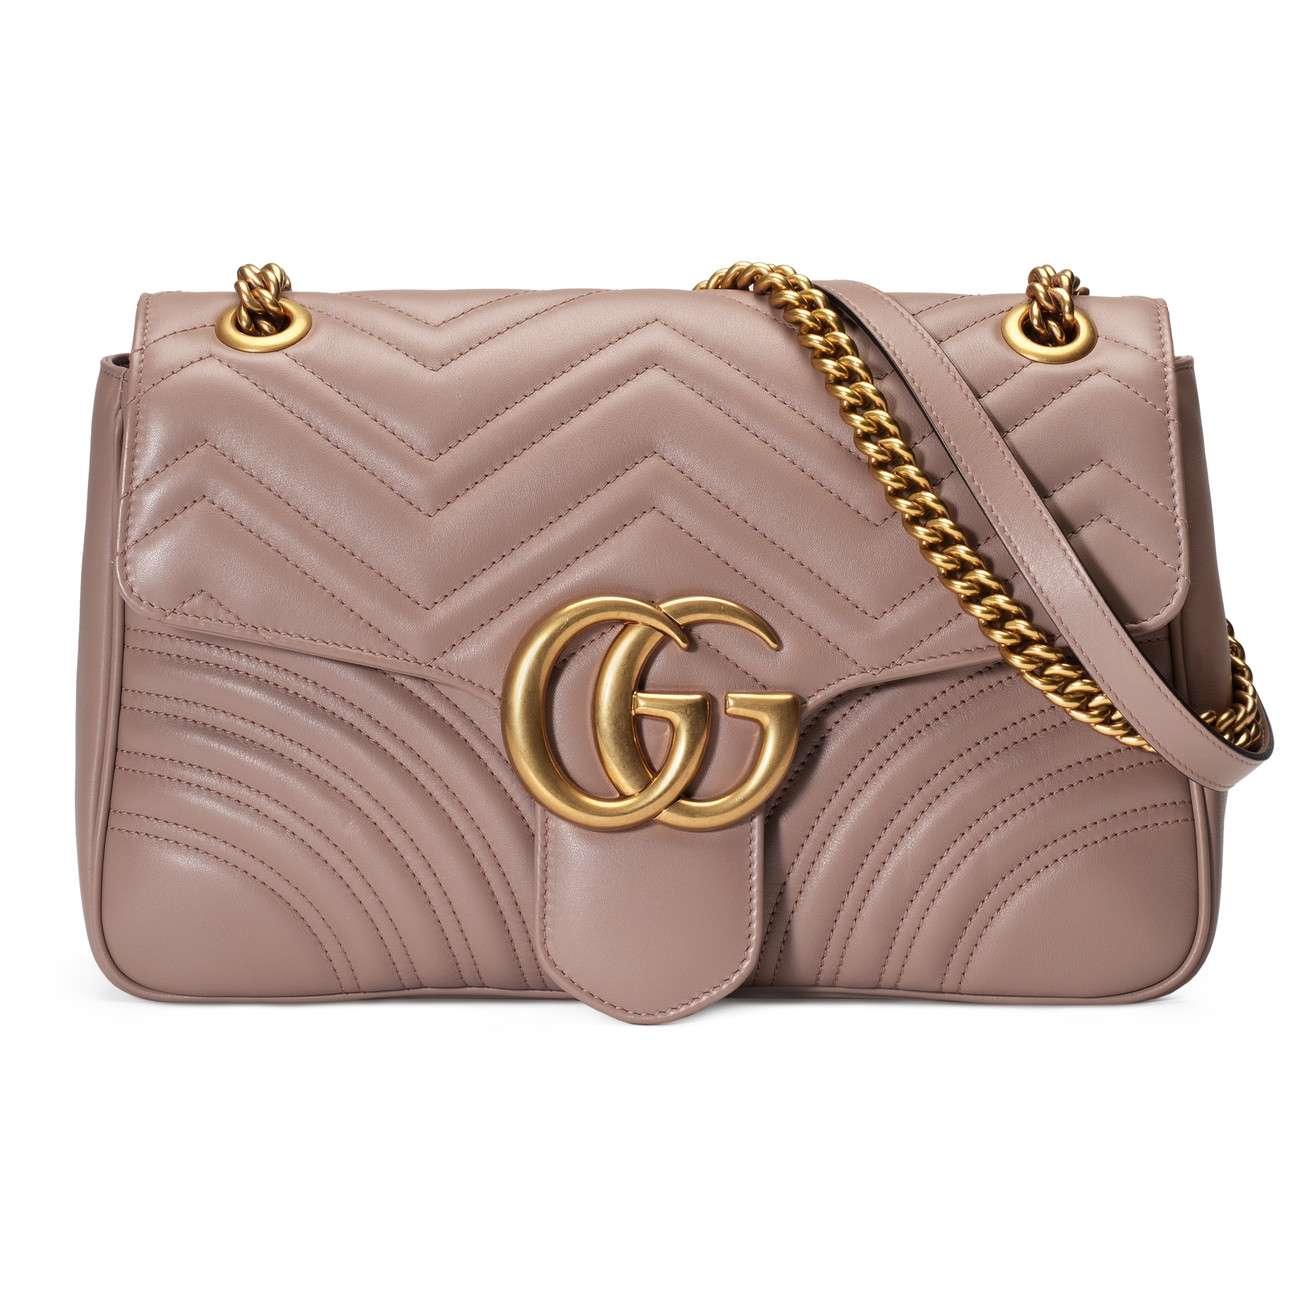 Gucci Leather GG Marmont Matelassé Shoulder Bag in Beige (Pink) - Save 26%  - Lyst